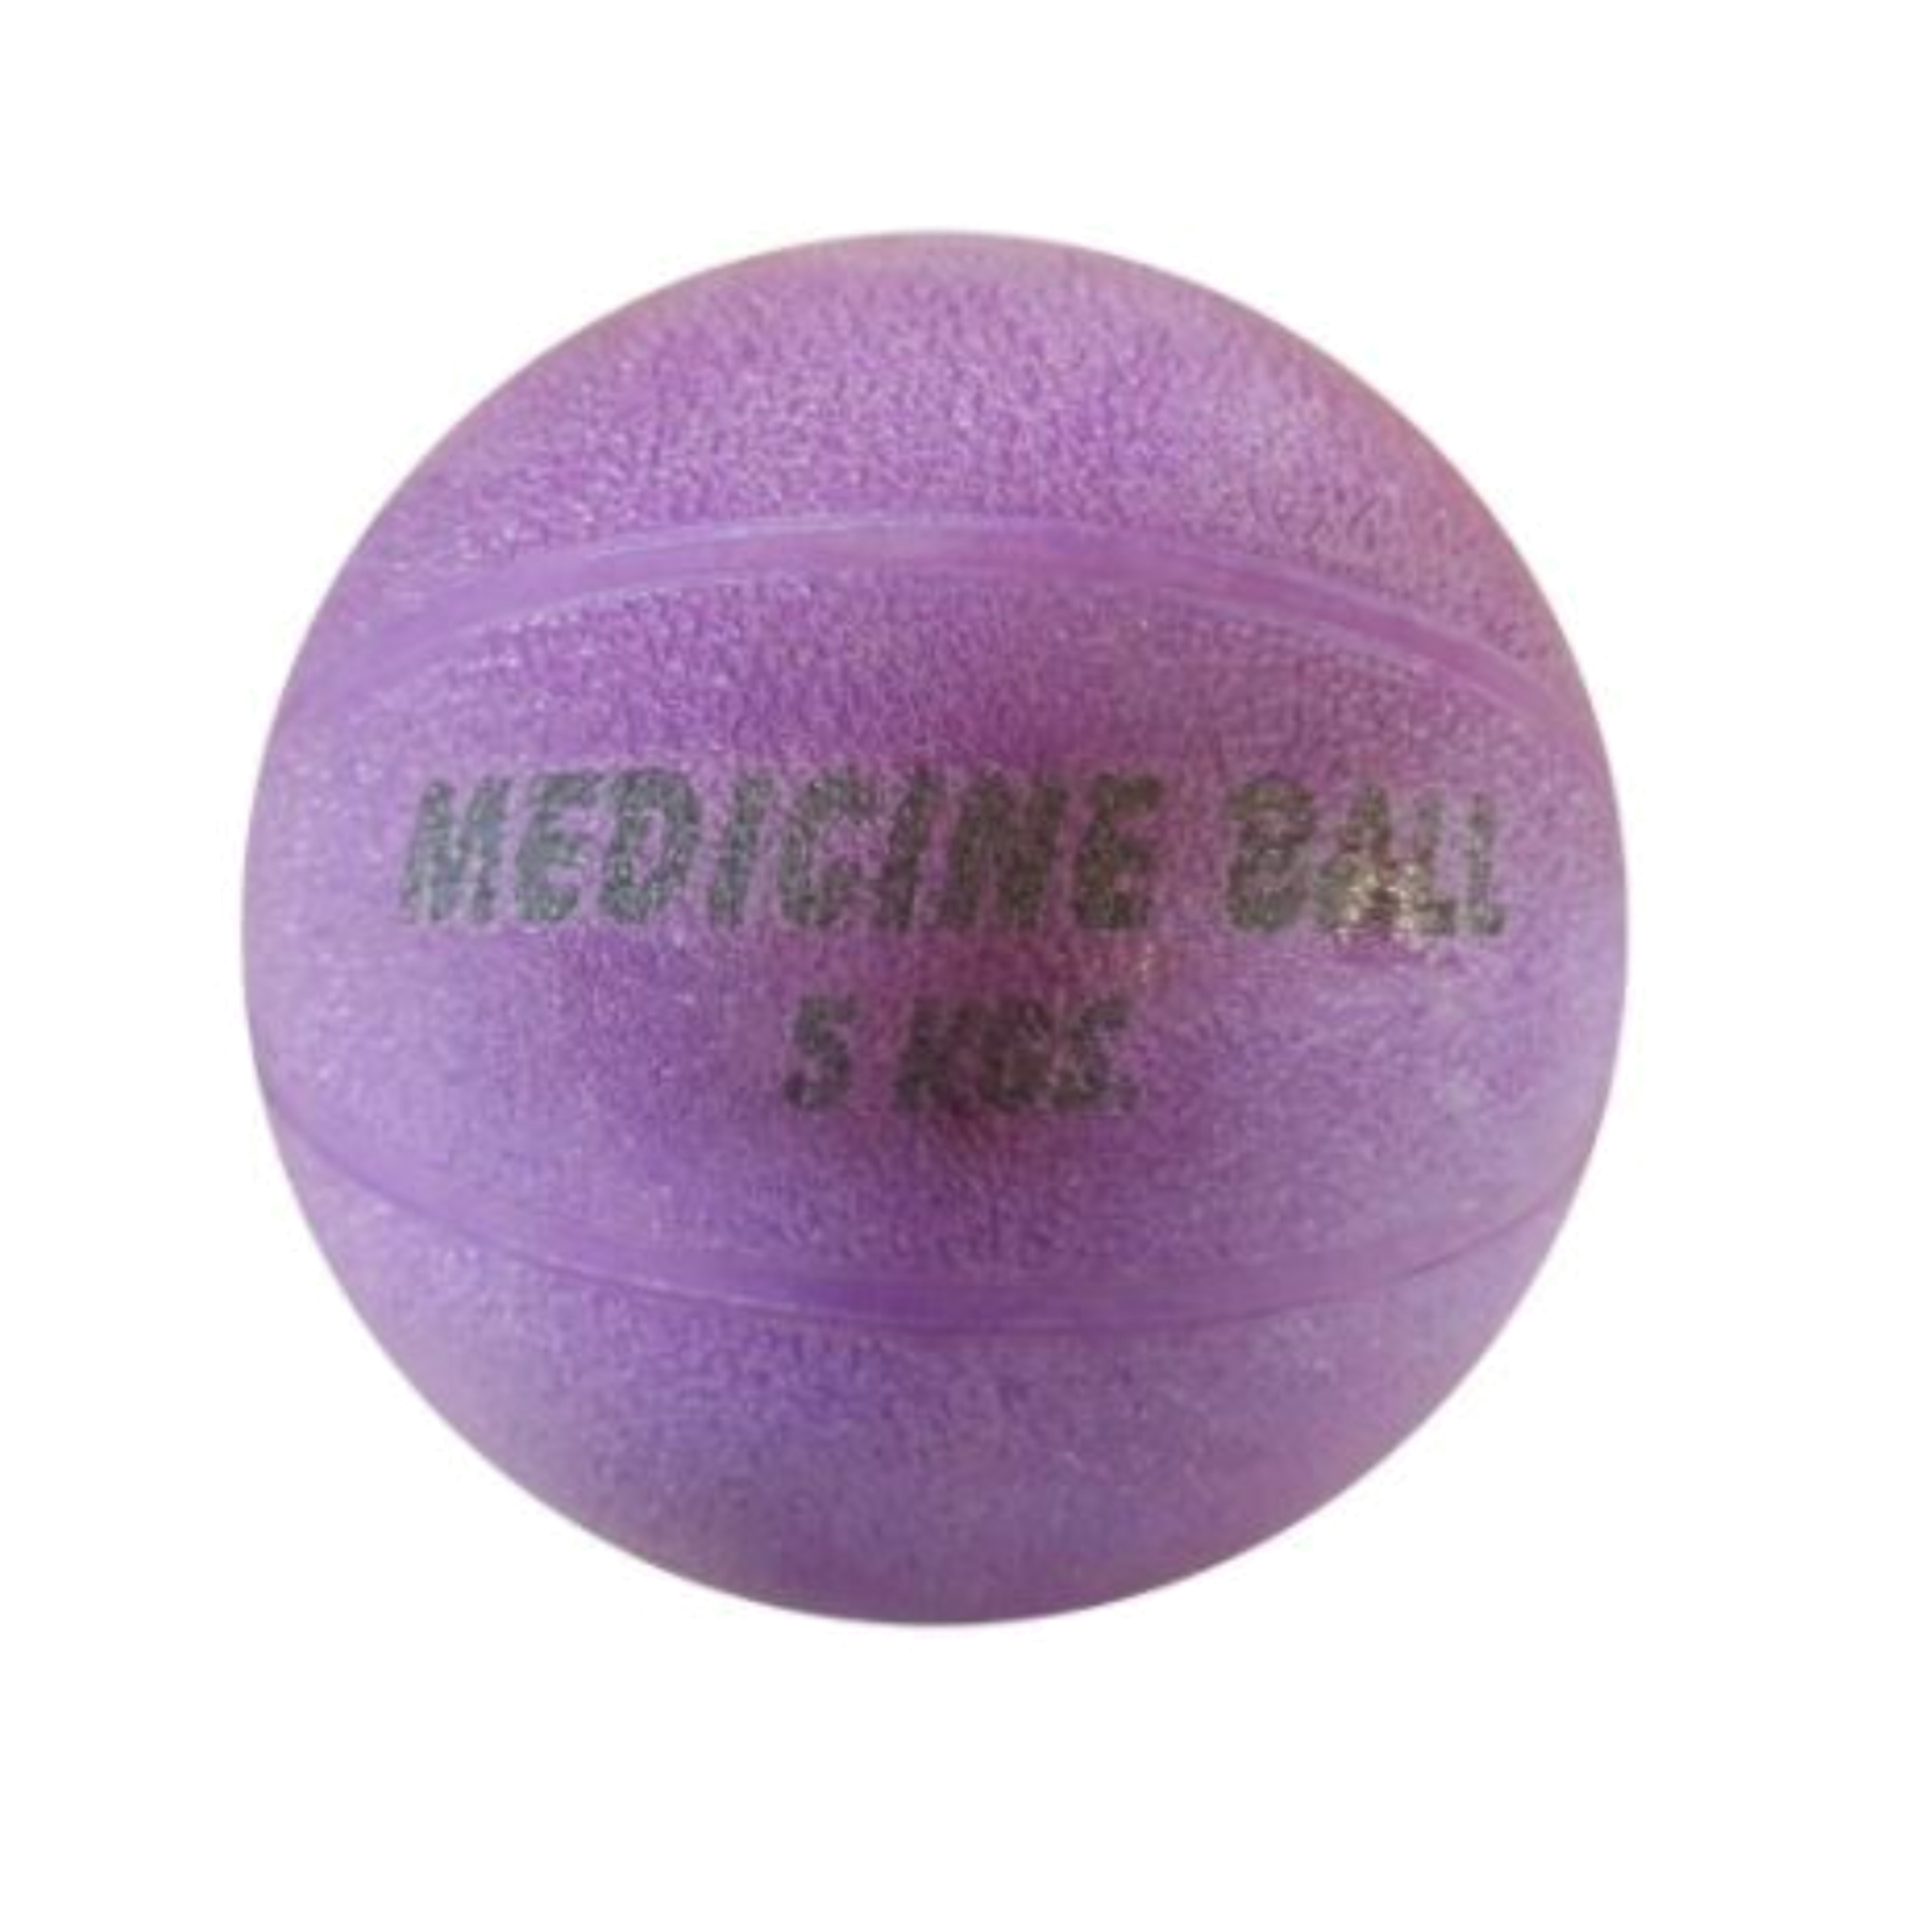 Balon Medicinal Sin Bote 5 Kilos - morado - 